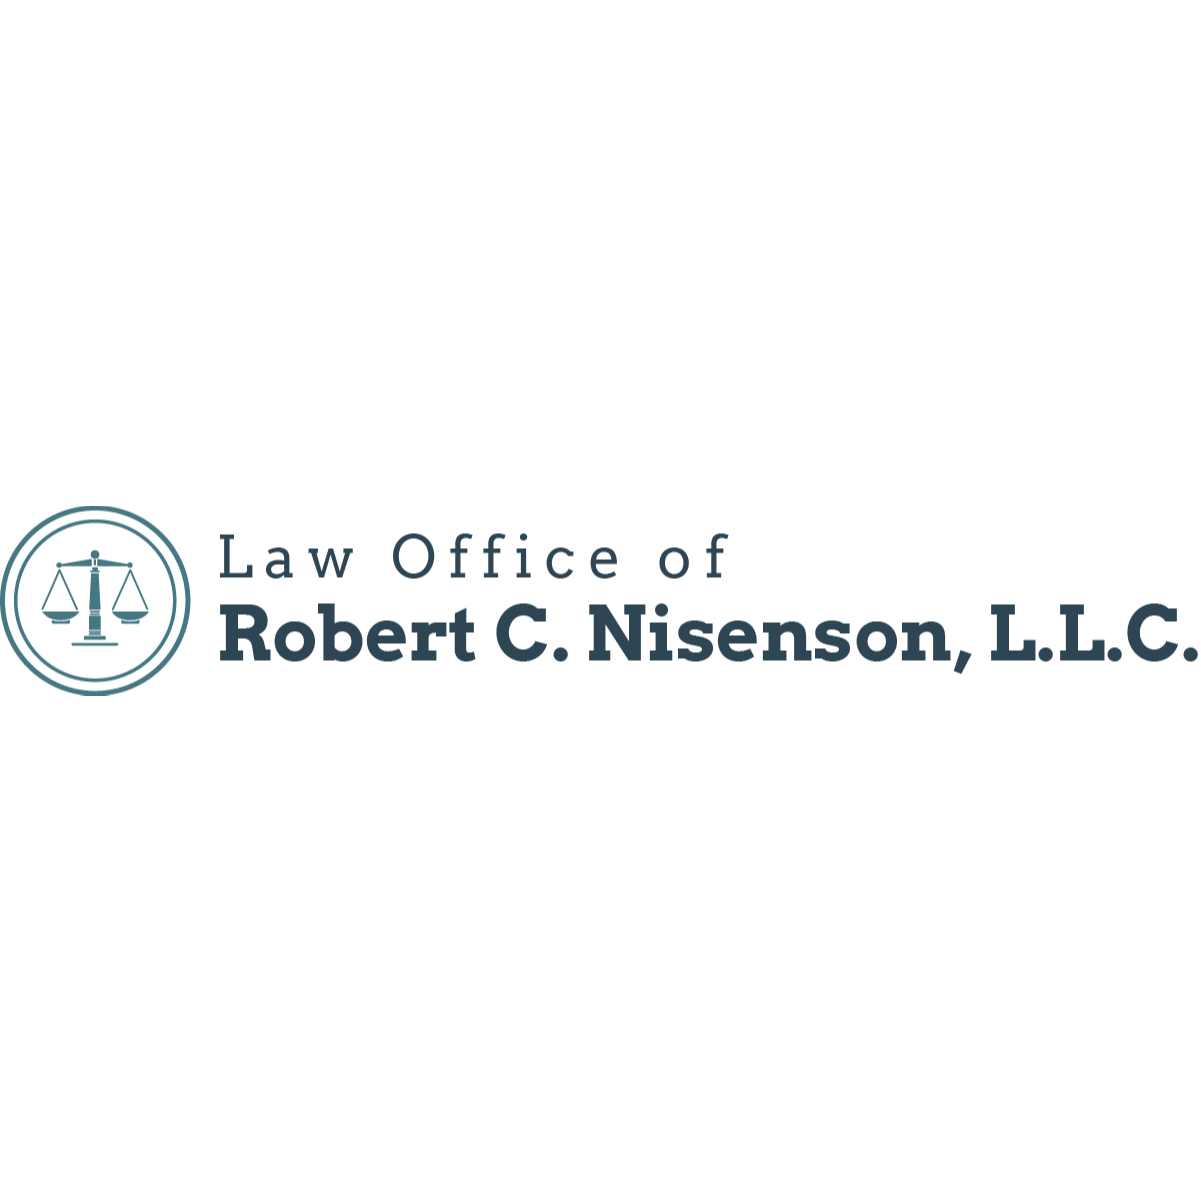 Law Office of Robert C. Nisenson, L.L.C. - East Brunswick, NJ 08816 - (732)518-8038 | ShowMeLocal.com